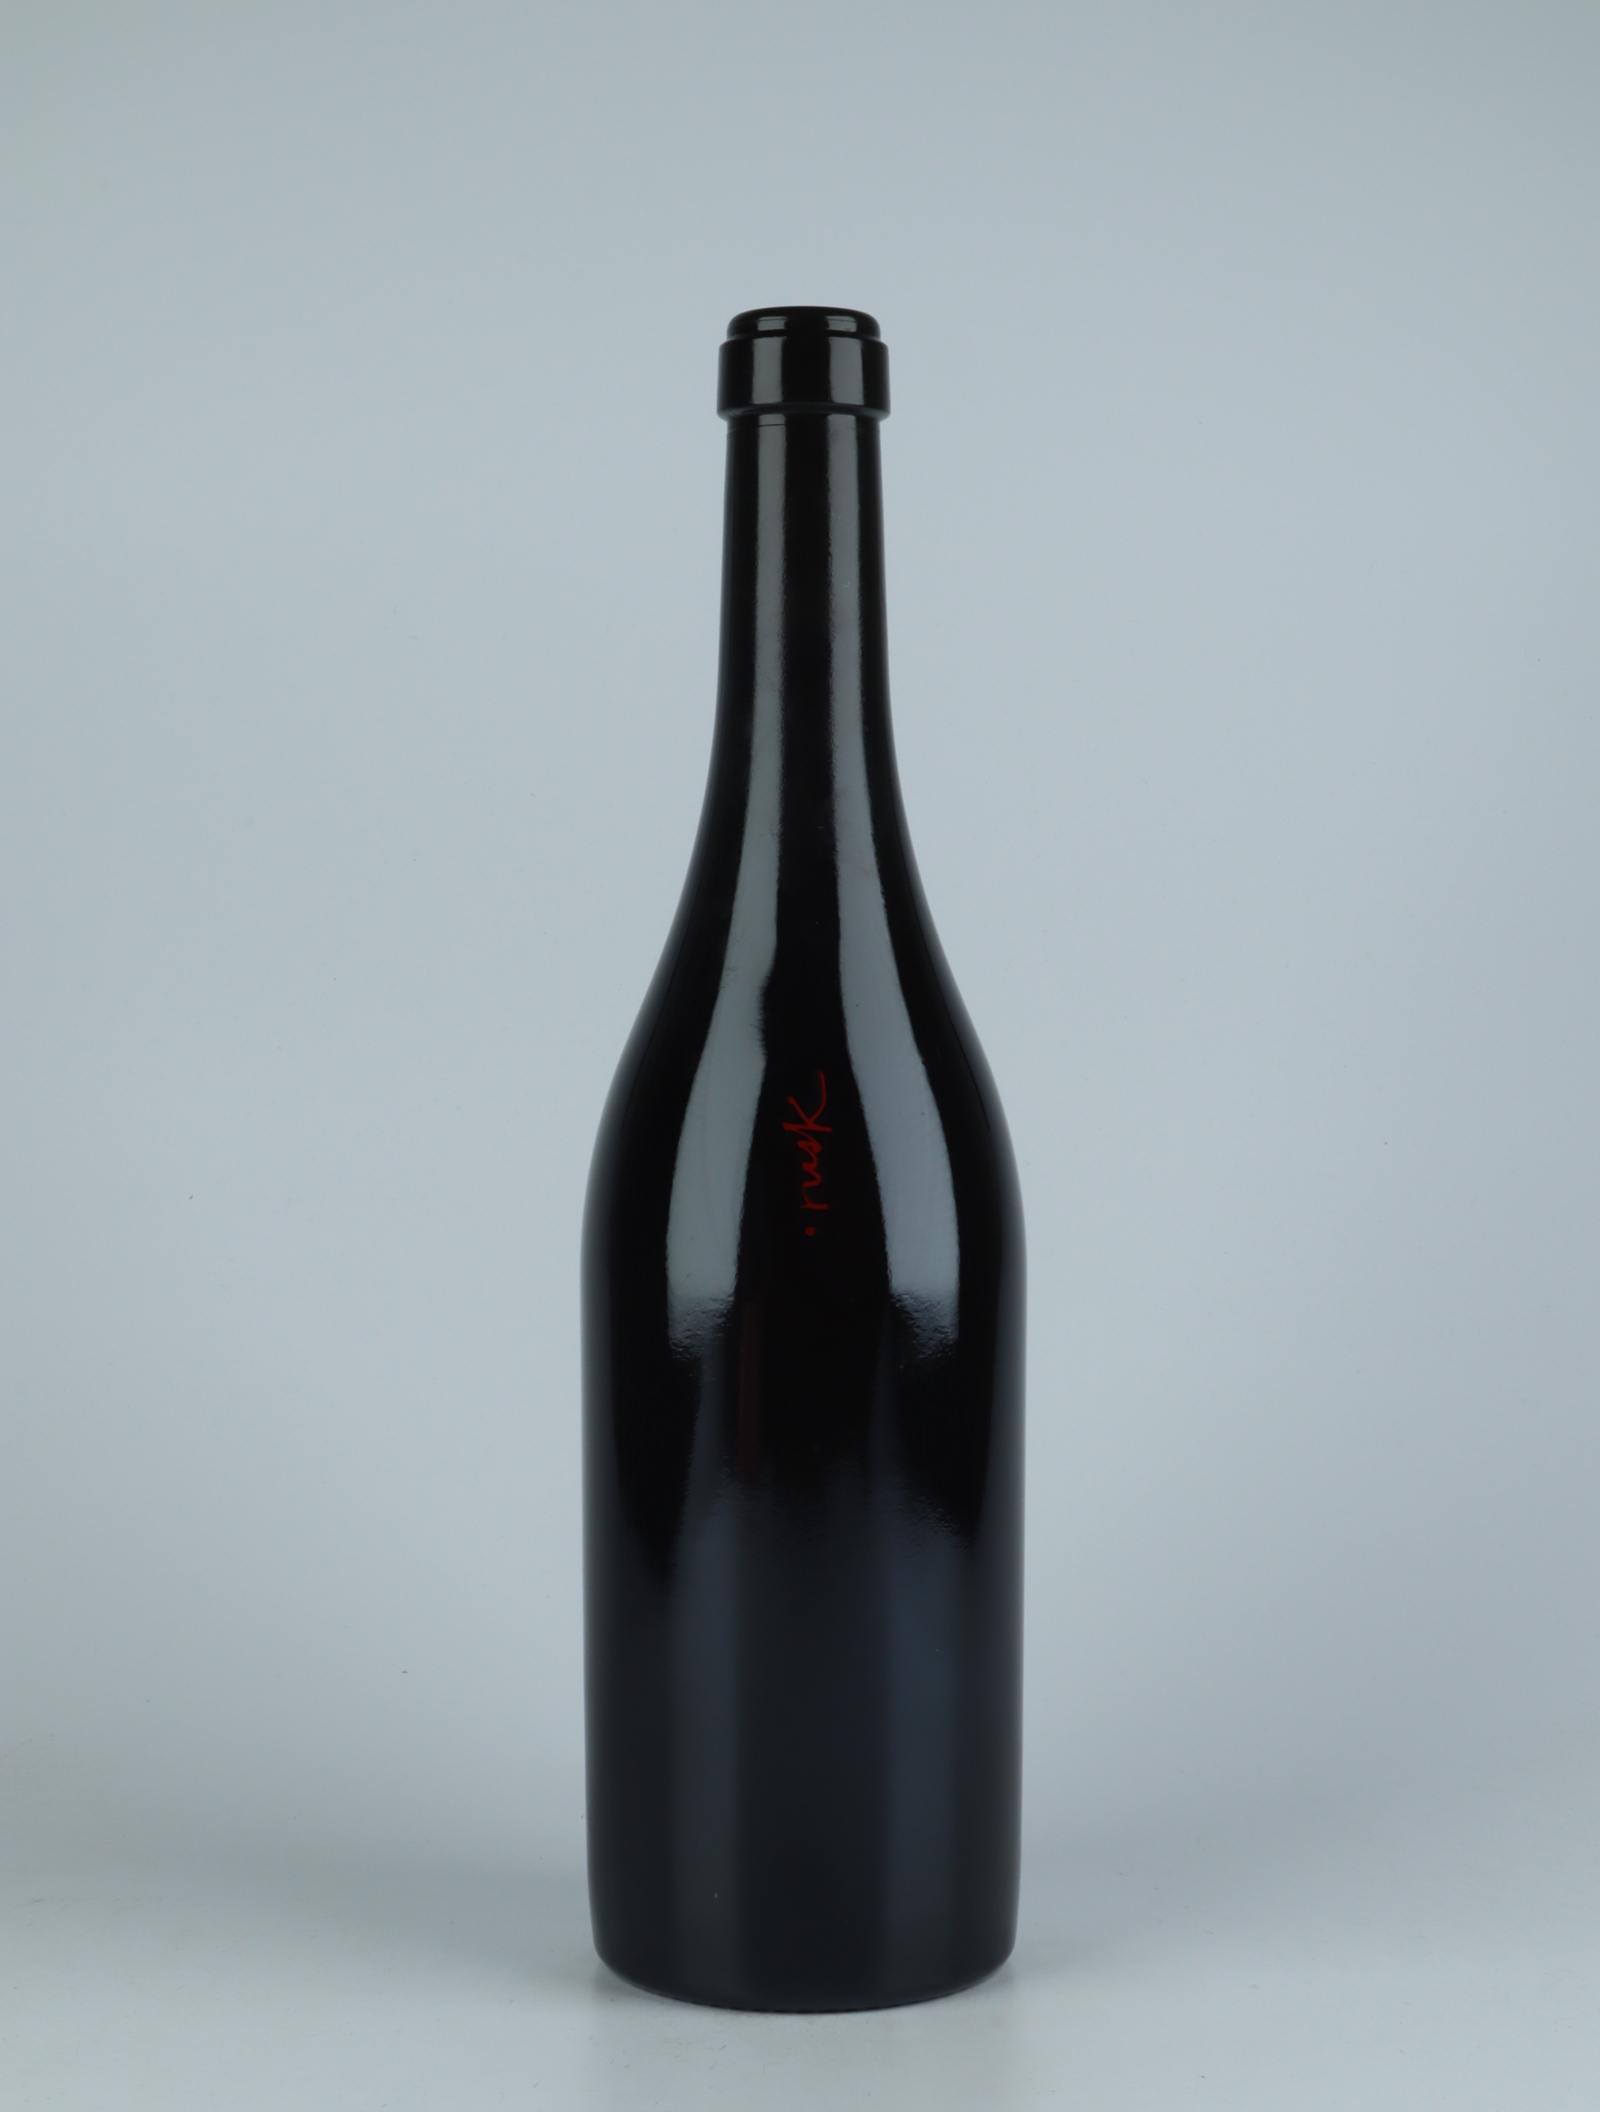 A bottle 2020 Rusk Red wine from Els Jelipins, Penedès in Spain